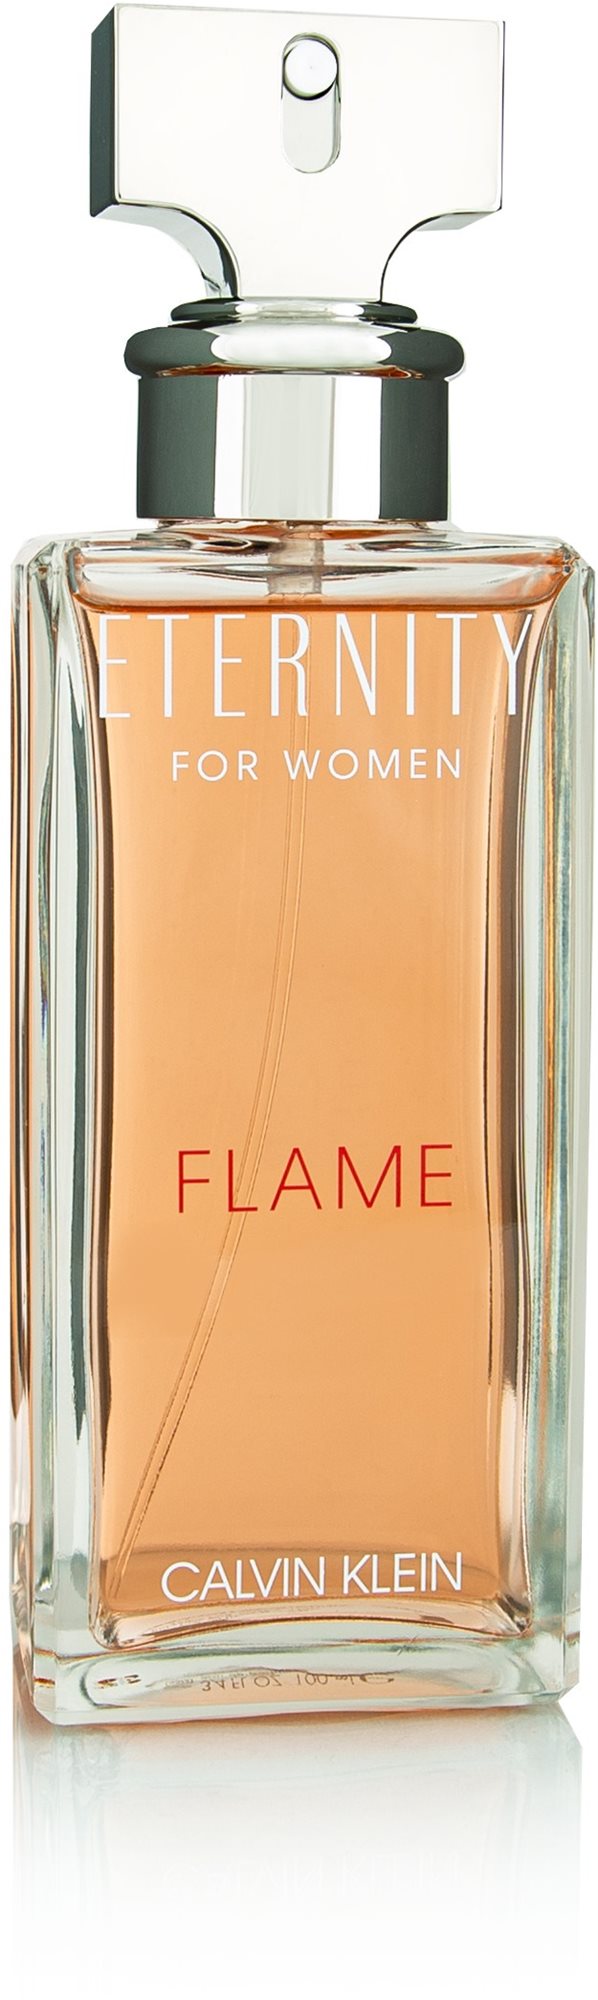 CALVIN KLEIN Eternity Flame For Women EdP 100 ml